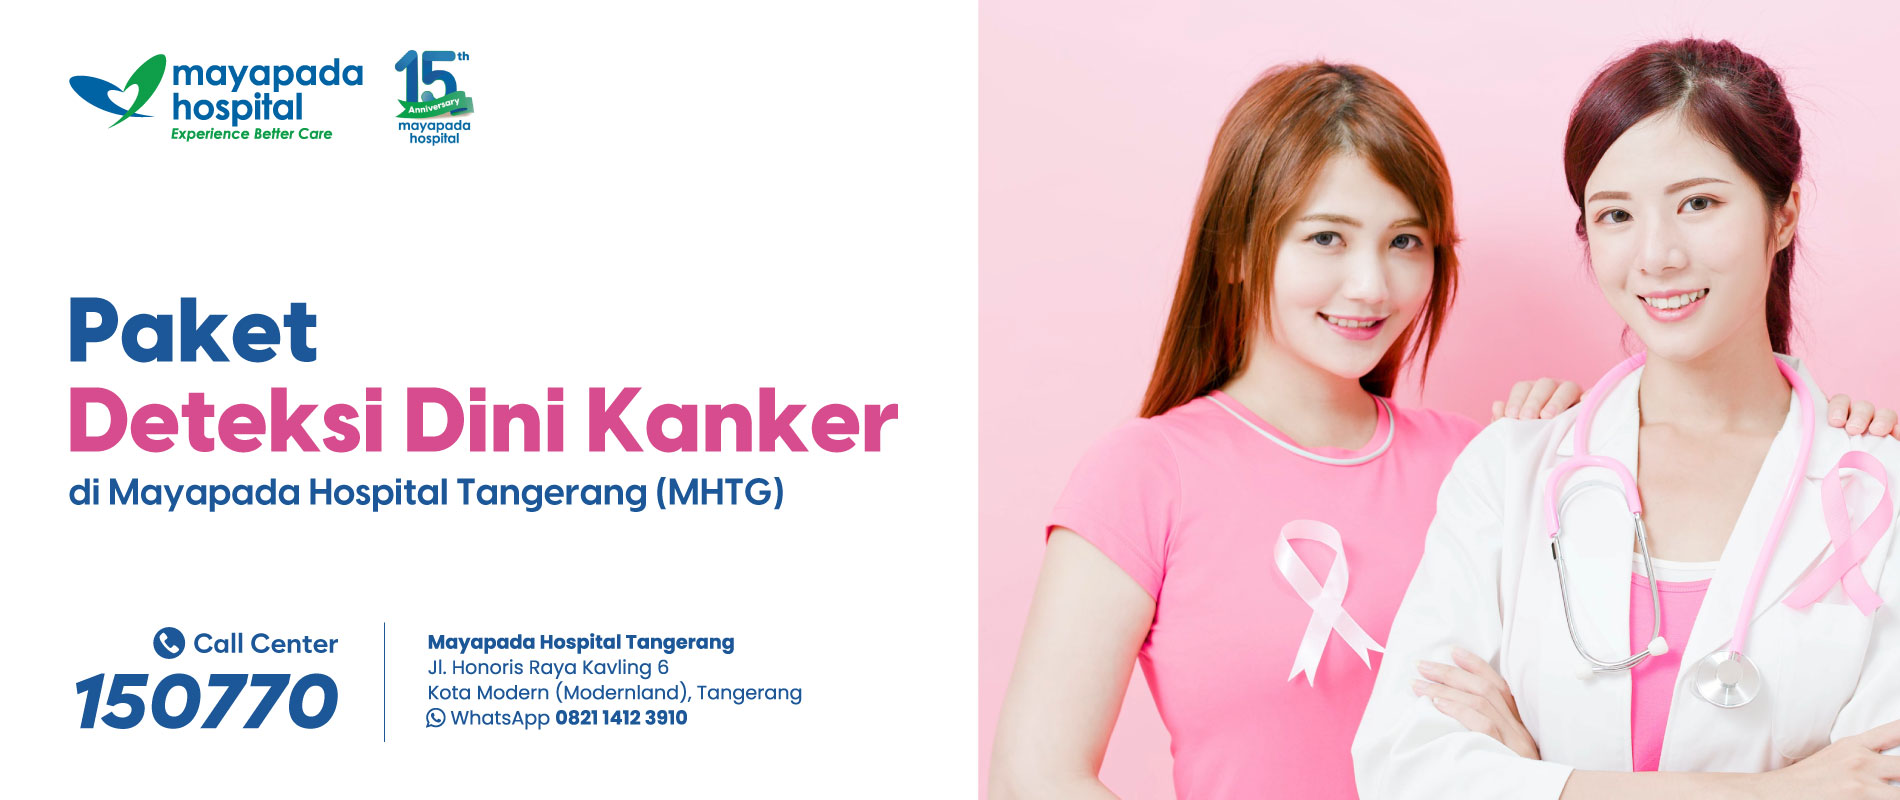 Promo Deteksi Dini Kanker Mayapada Hospital Tangerang (MHTG) IMG